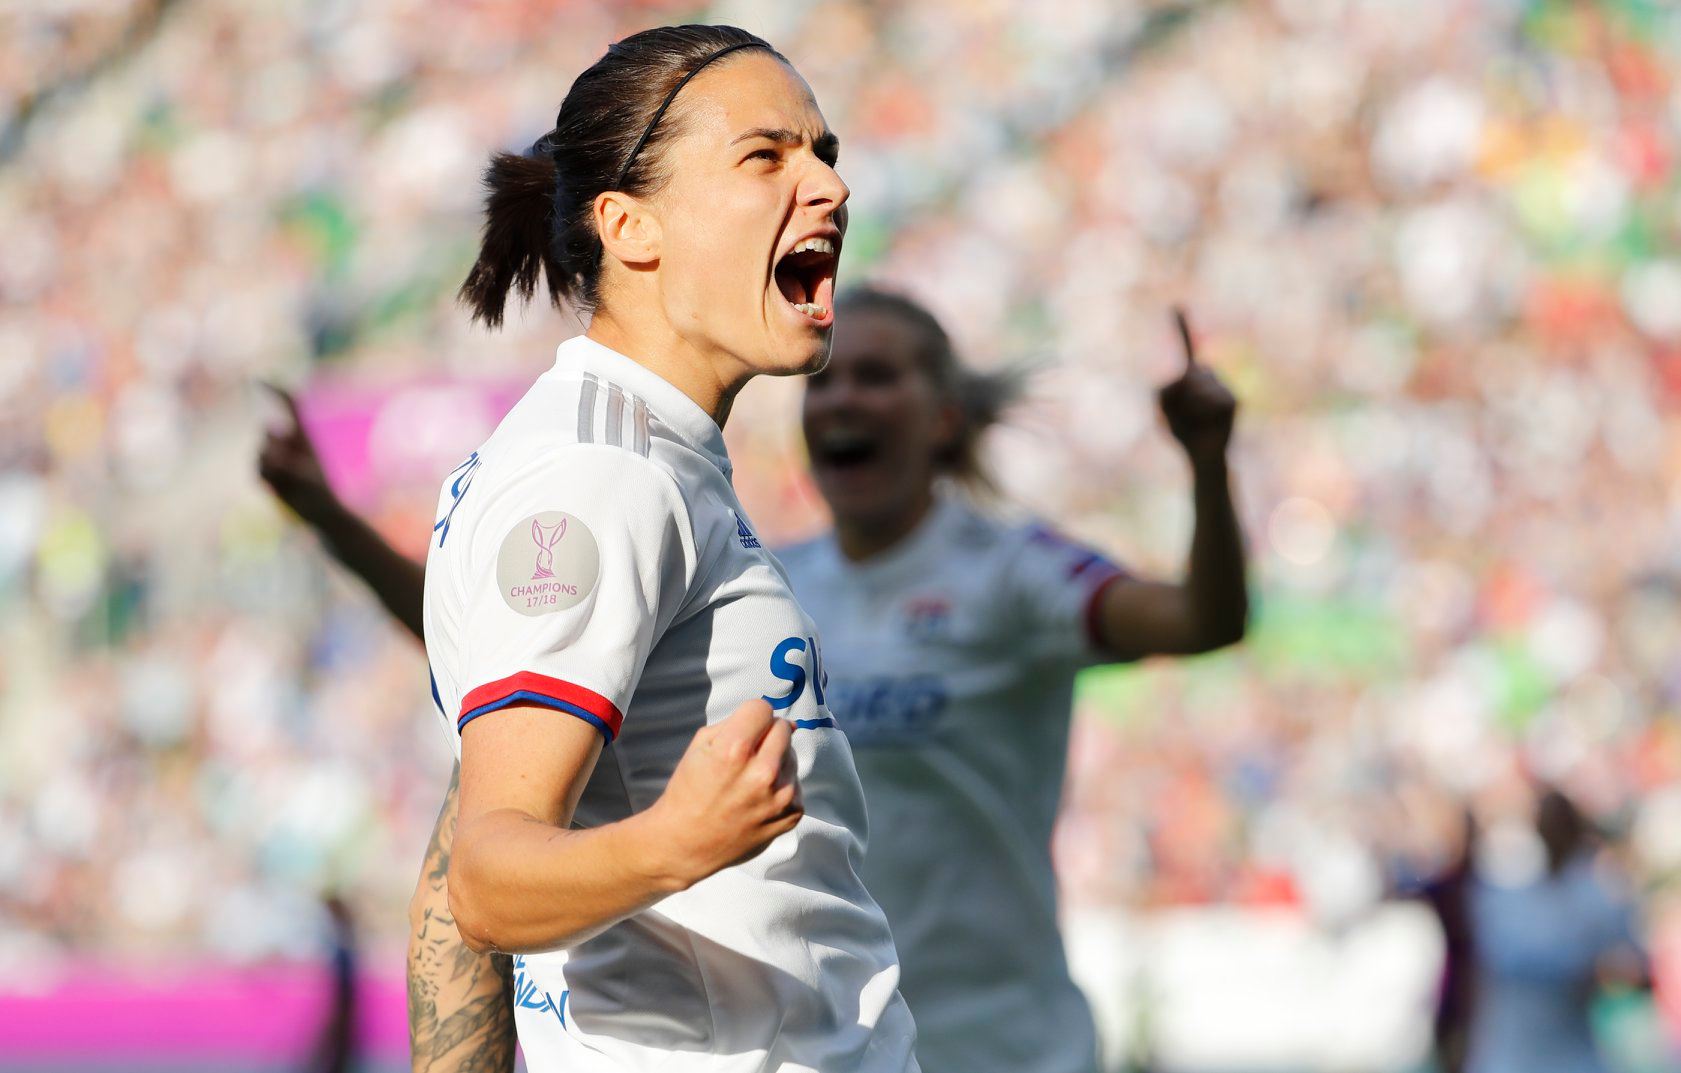 DirecTV transmitirán la Copa Mundial Femenina en 4K | Digital Trends Español